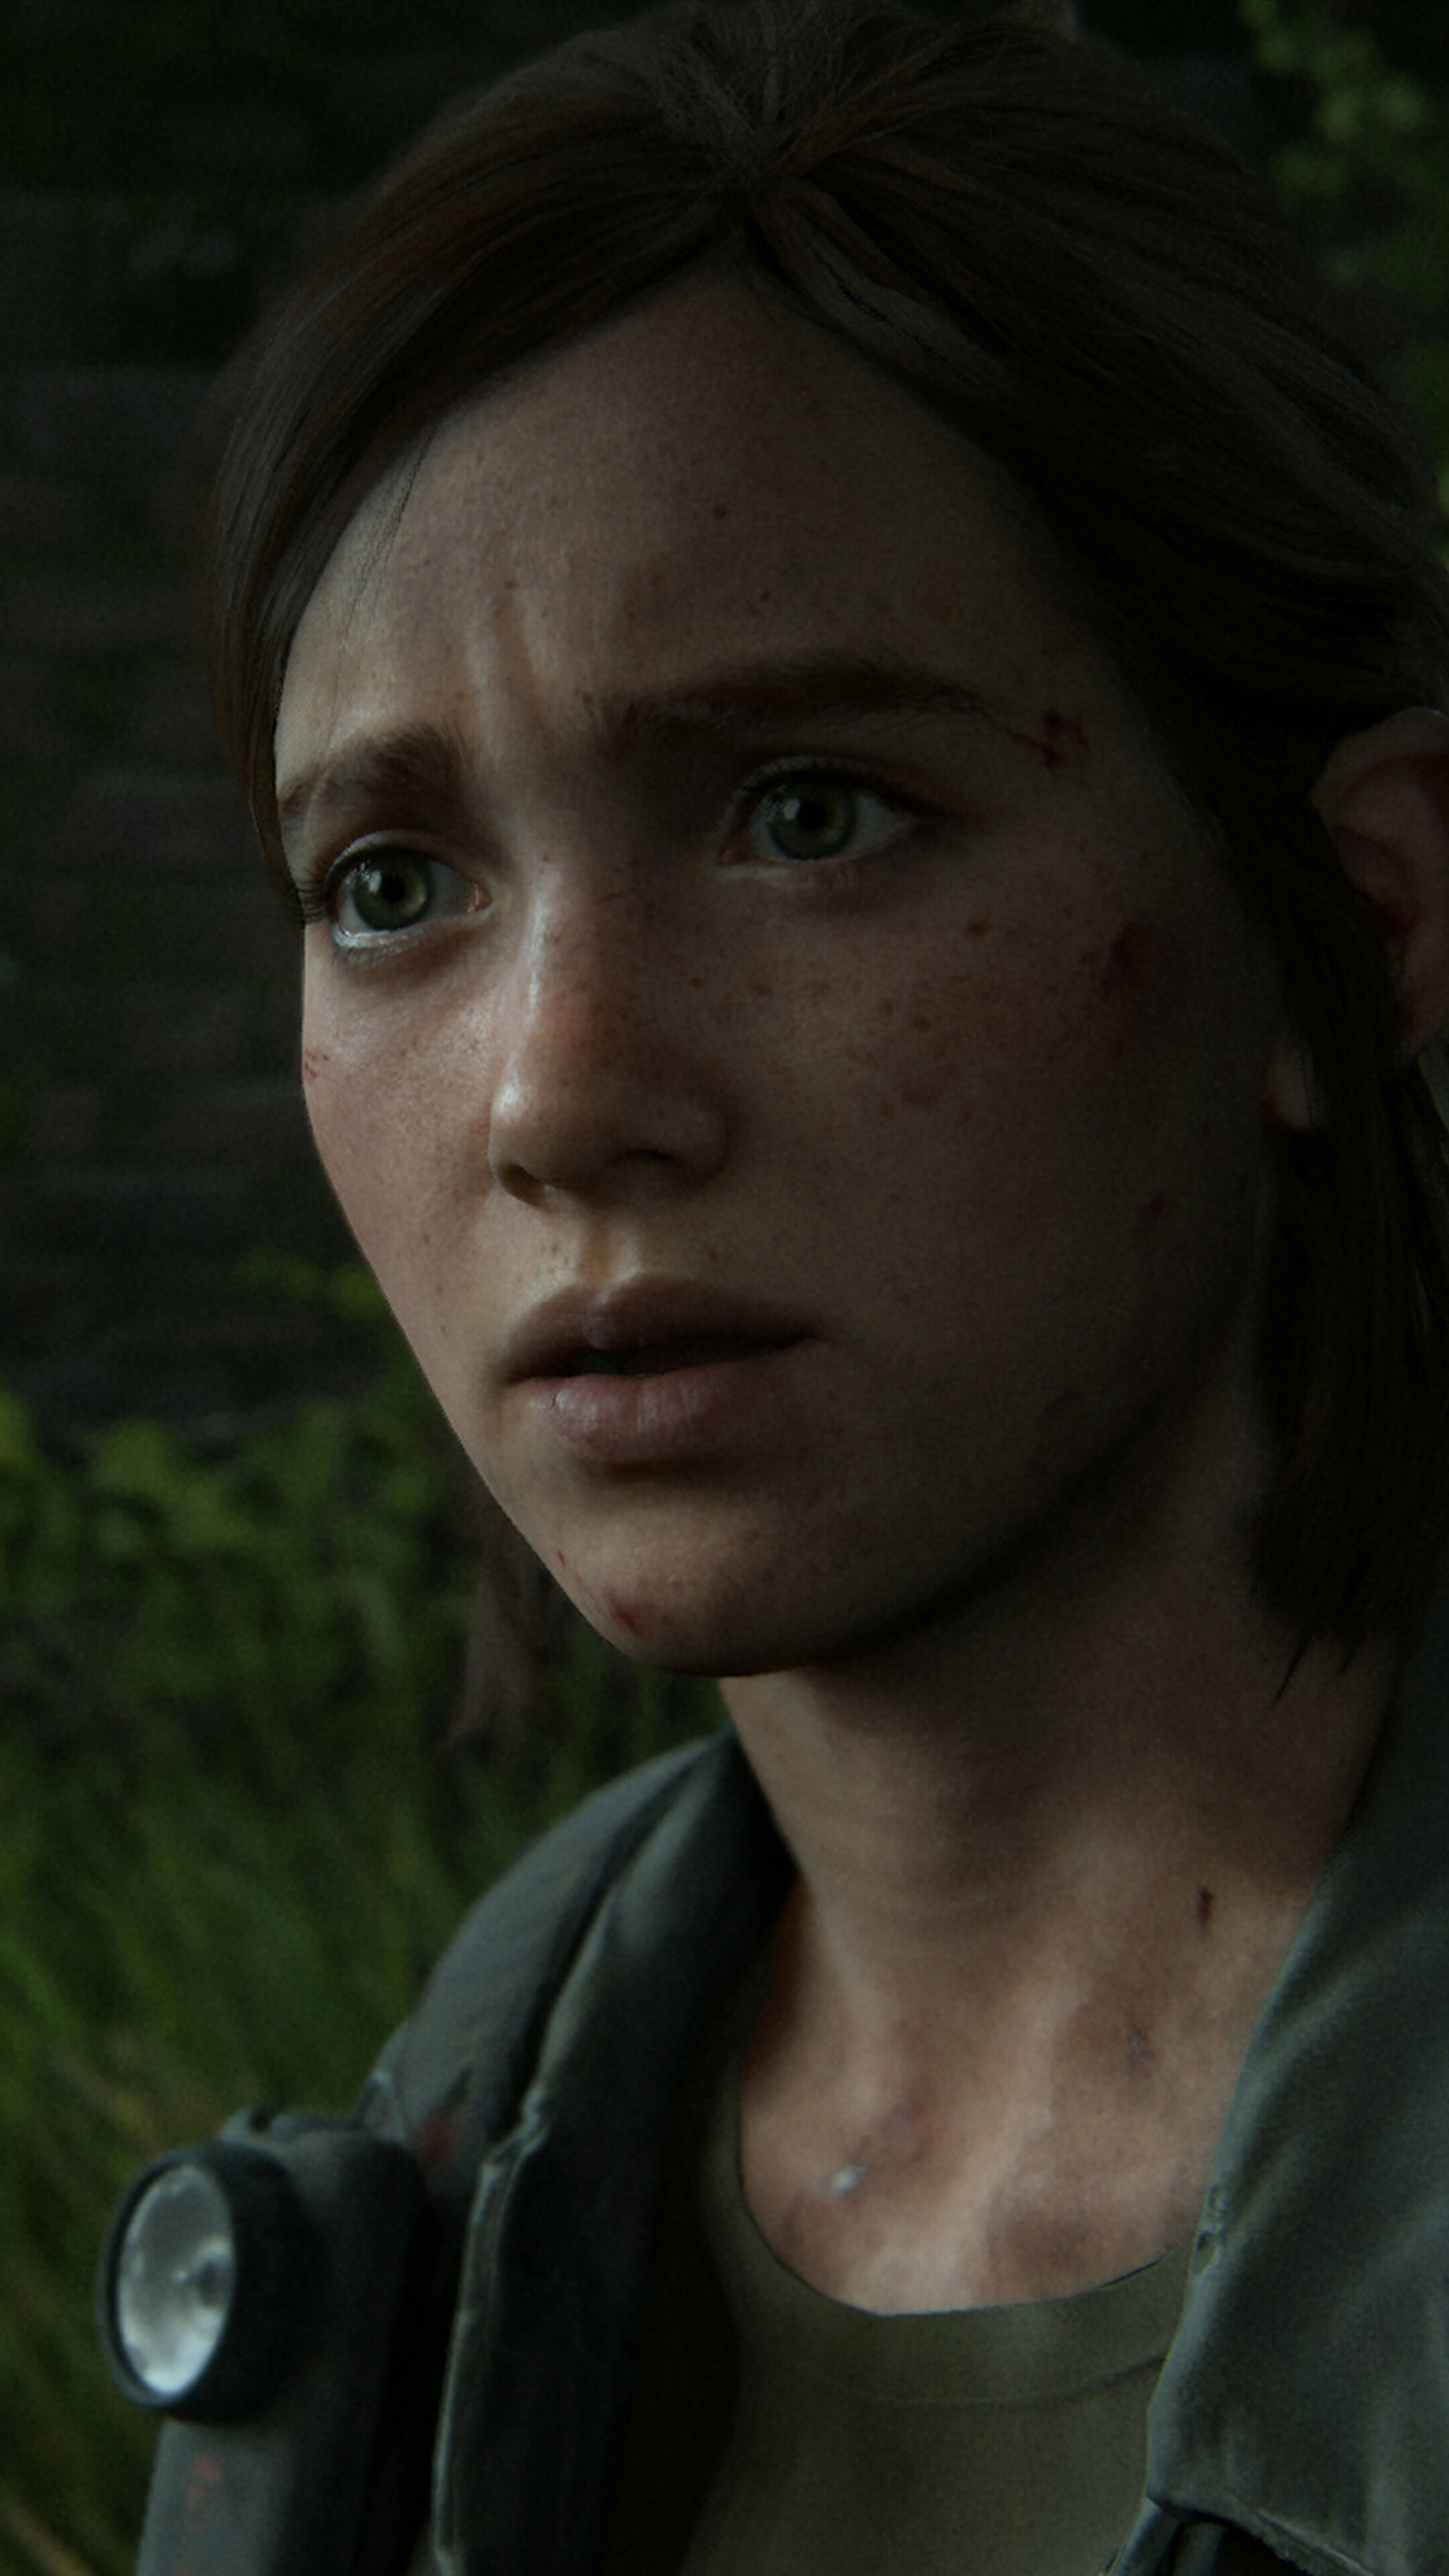 Ellie The Last of Us Part 1 Remake 4K Wallpaper iPhone HD Phone #3271h